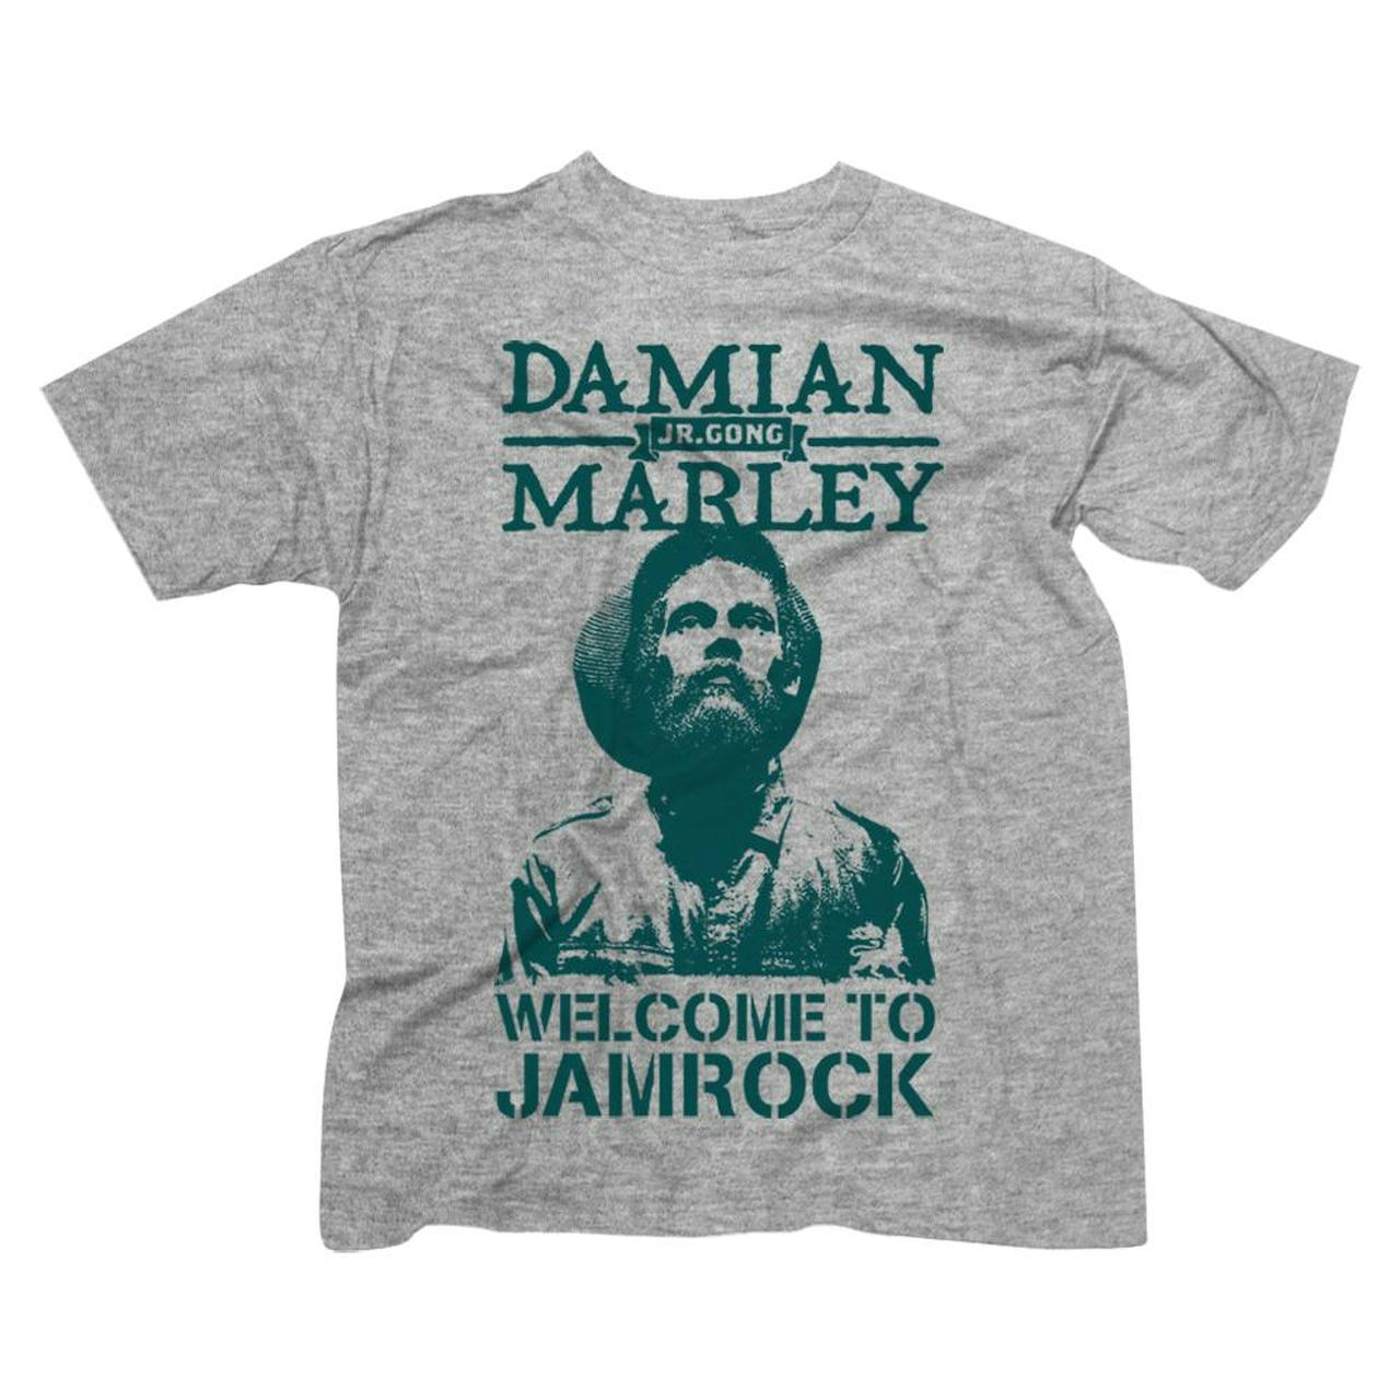 Damian Marley "Welcome to Jamrock" T-Shirt